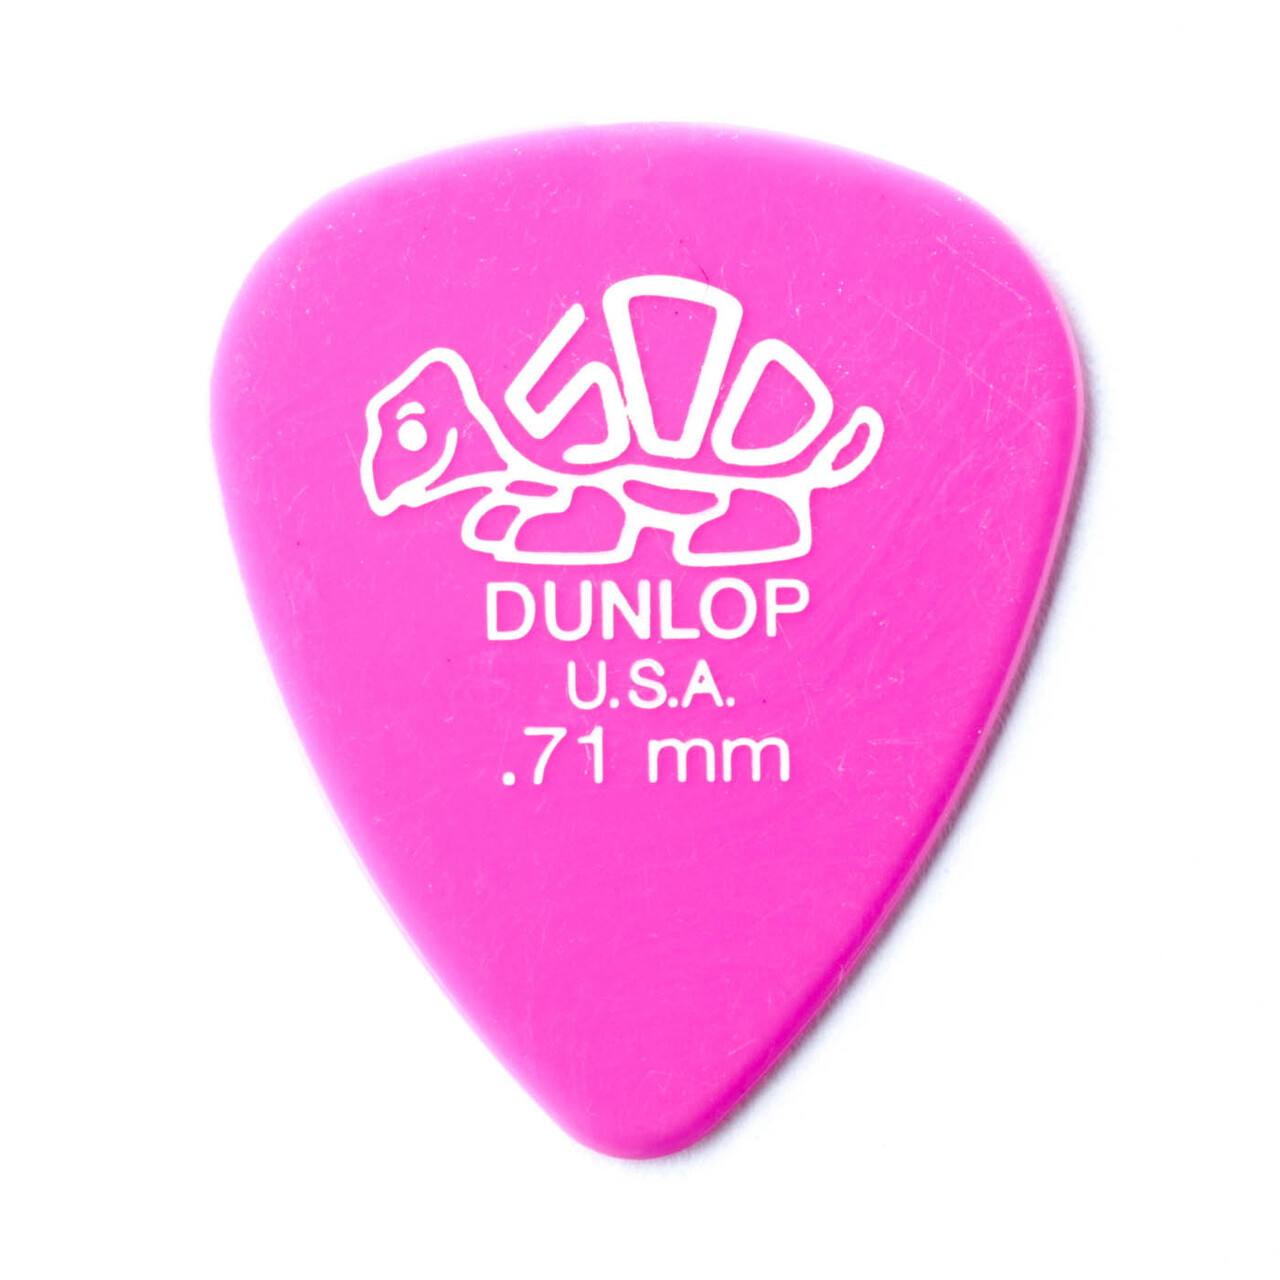 Dunlop 던롭 델린 피크 스탠다드 0.71mm